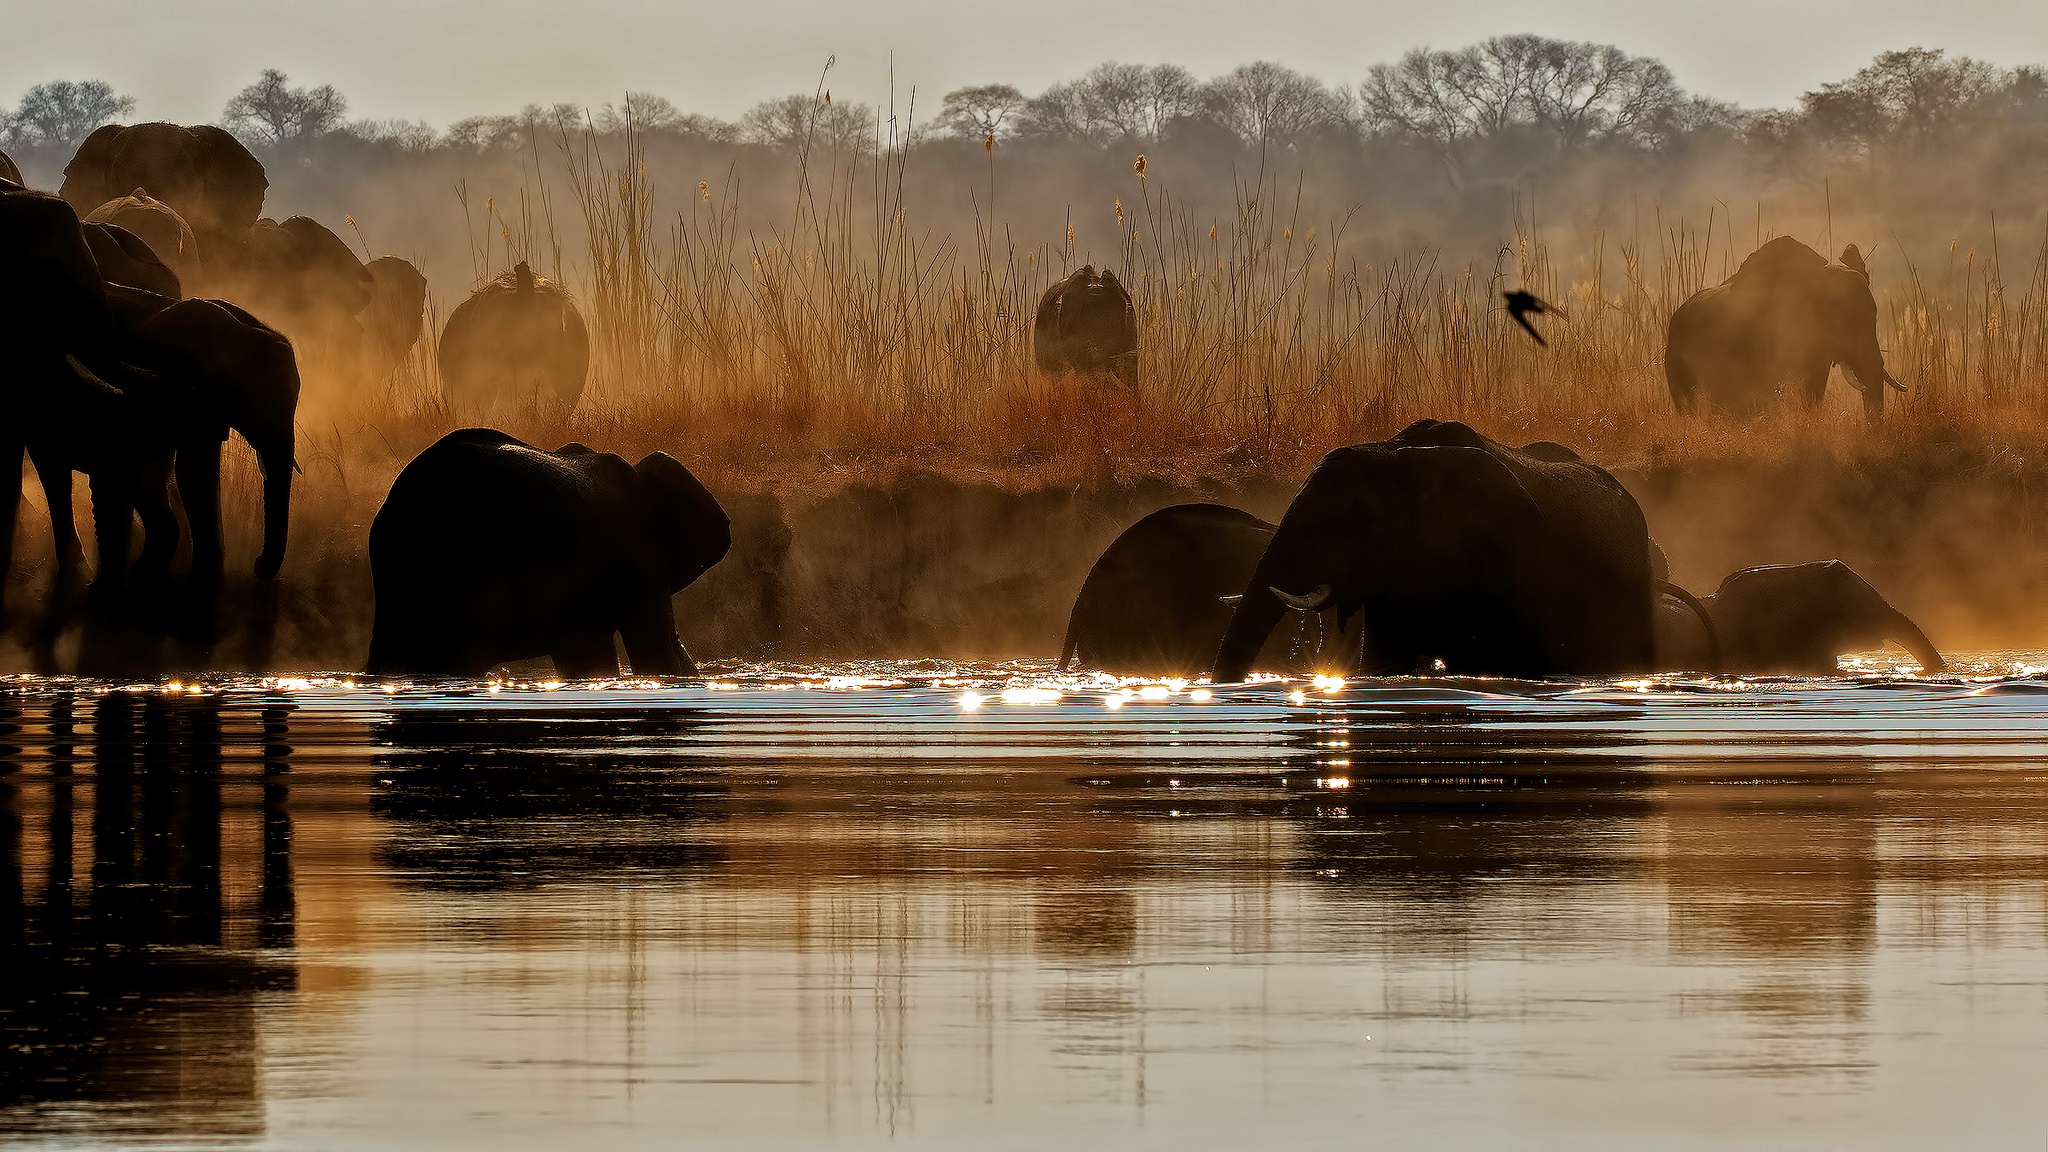 Elephant river. Слон река. Африка фото. Стадо слонов.